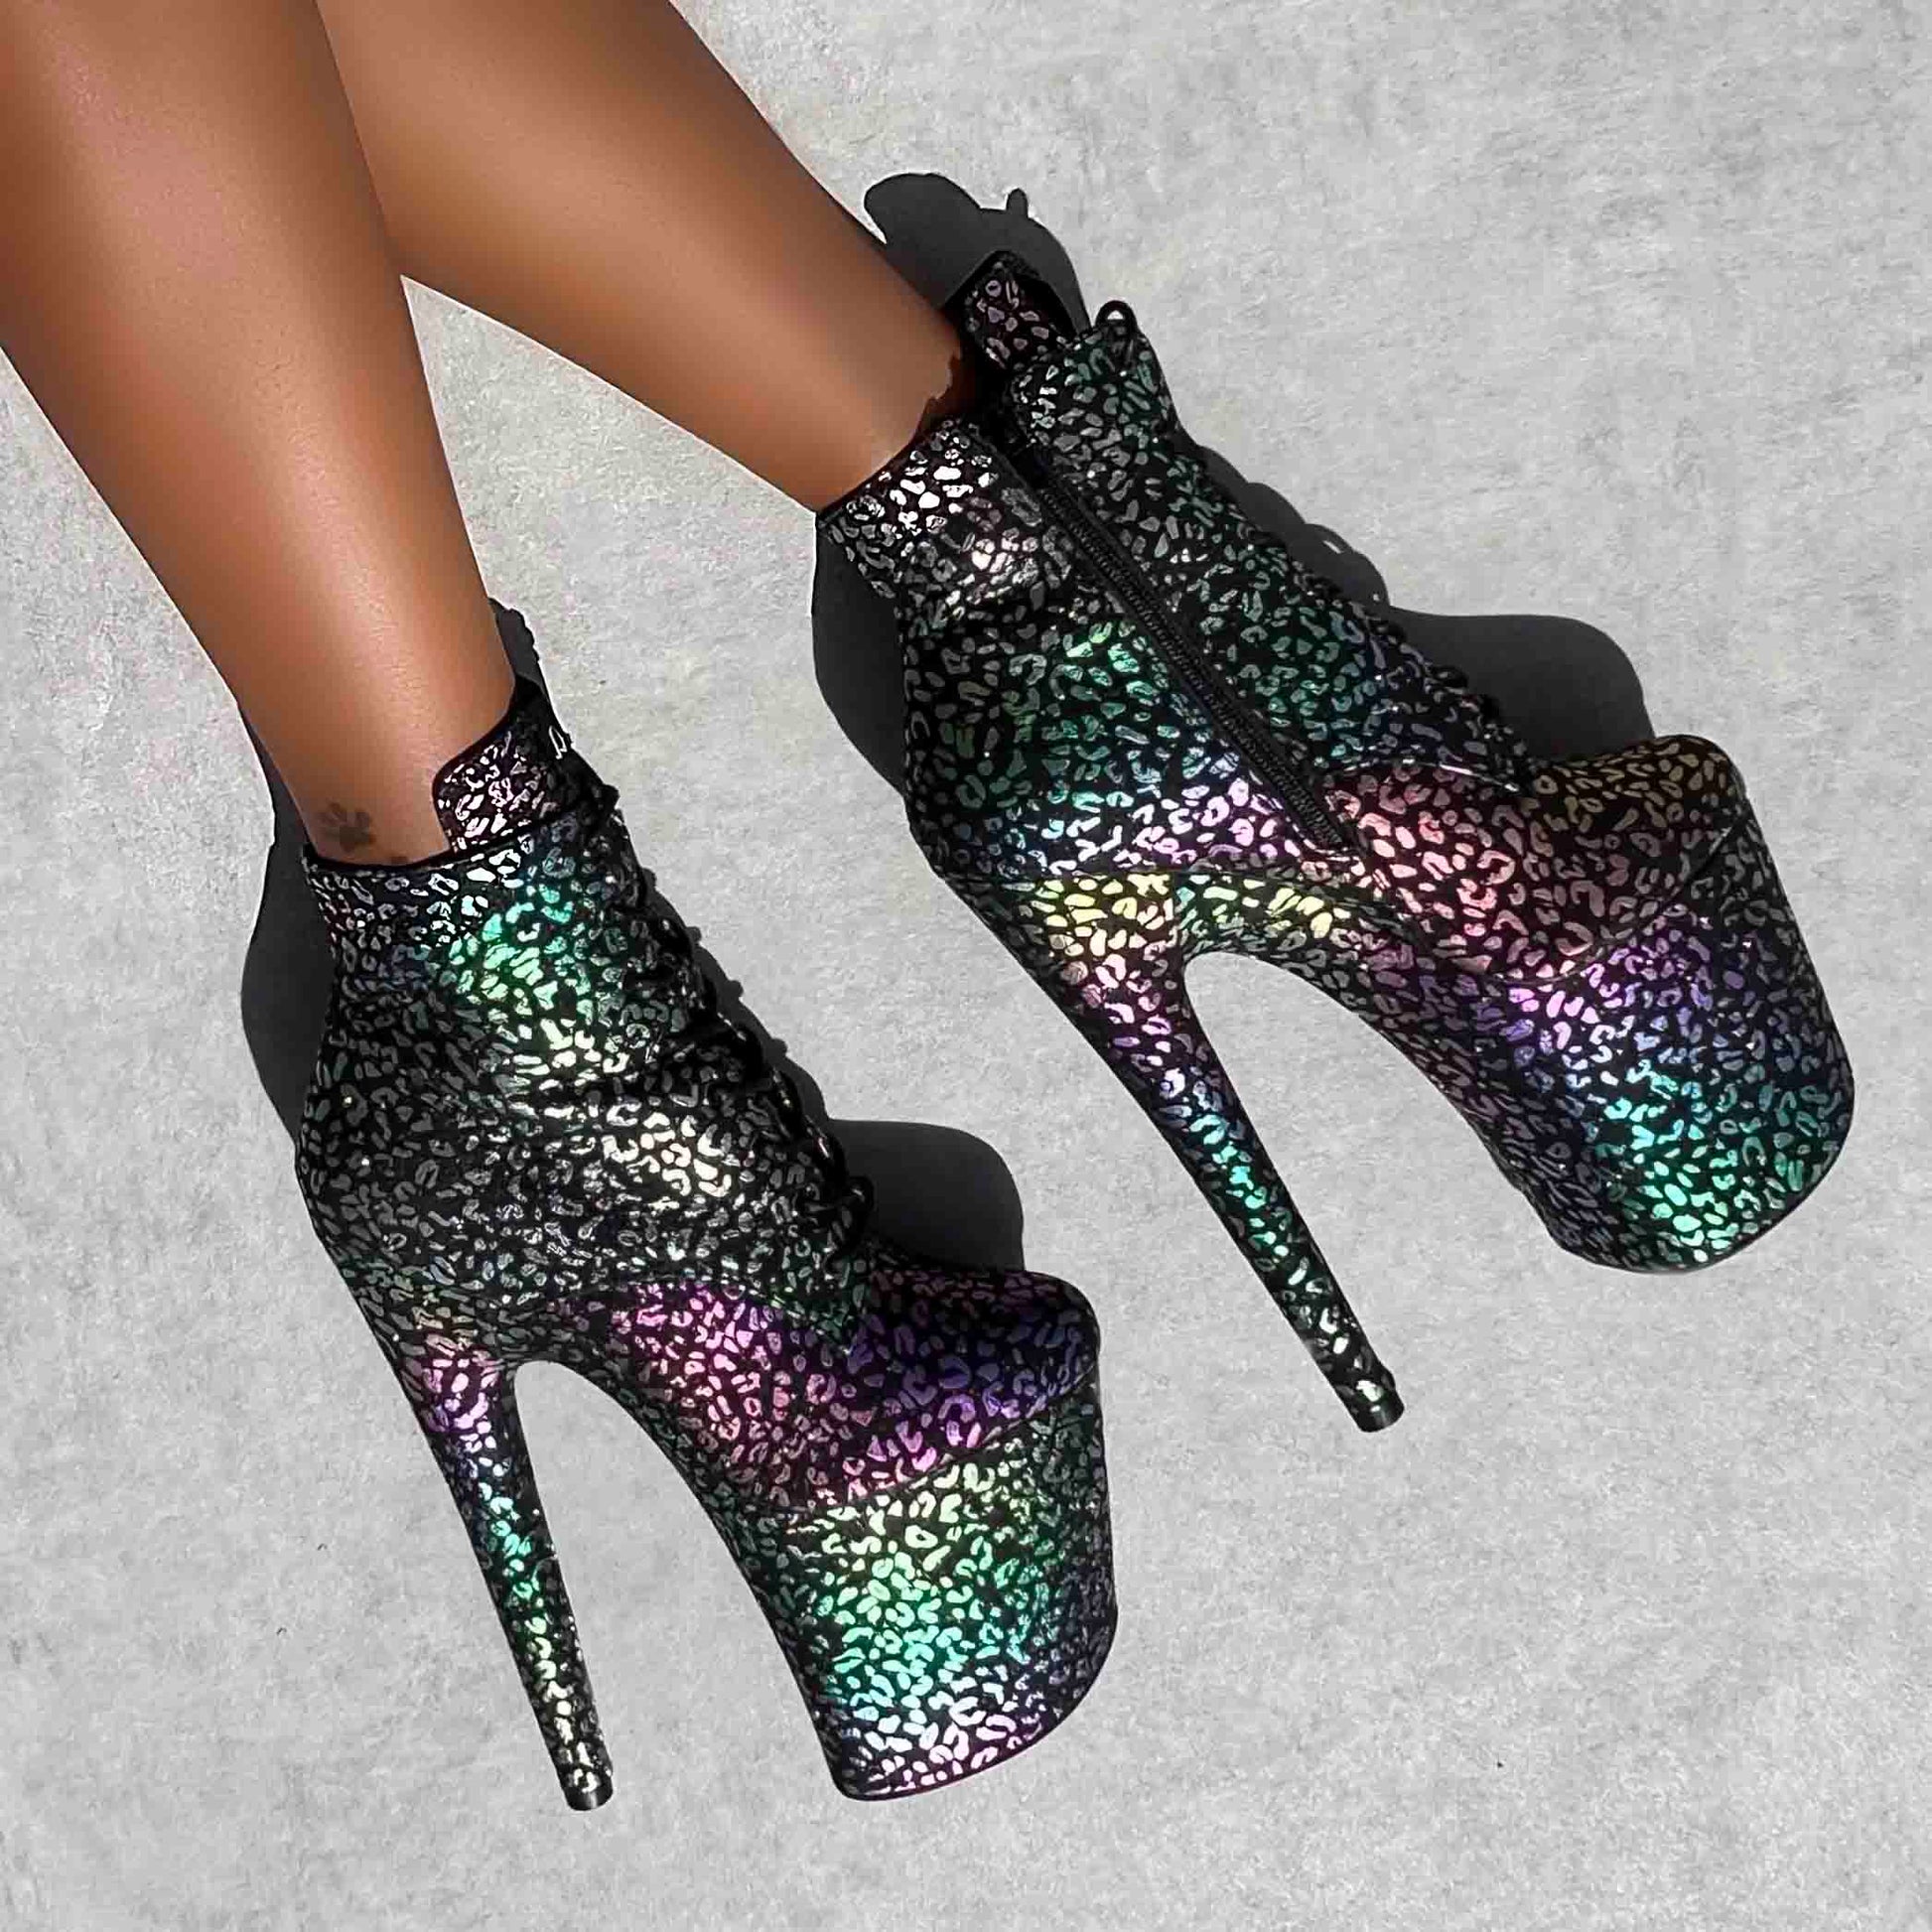 Moonlight Leopard Ankle Boot - 8INCH, stripper shoe, stripper heel, pole heel, not a pleaser, platform, dancer, pole dance, floor work